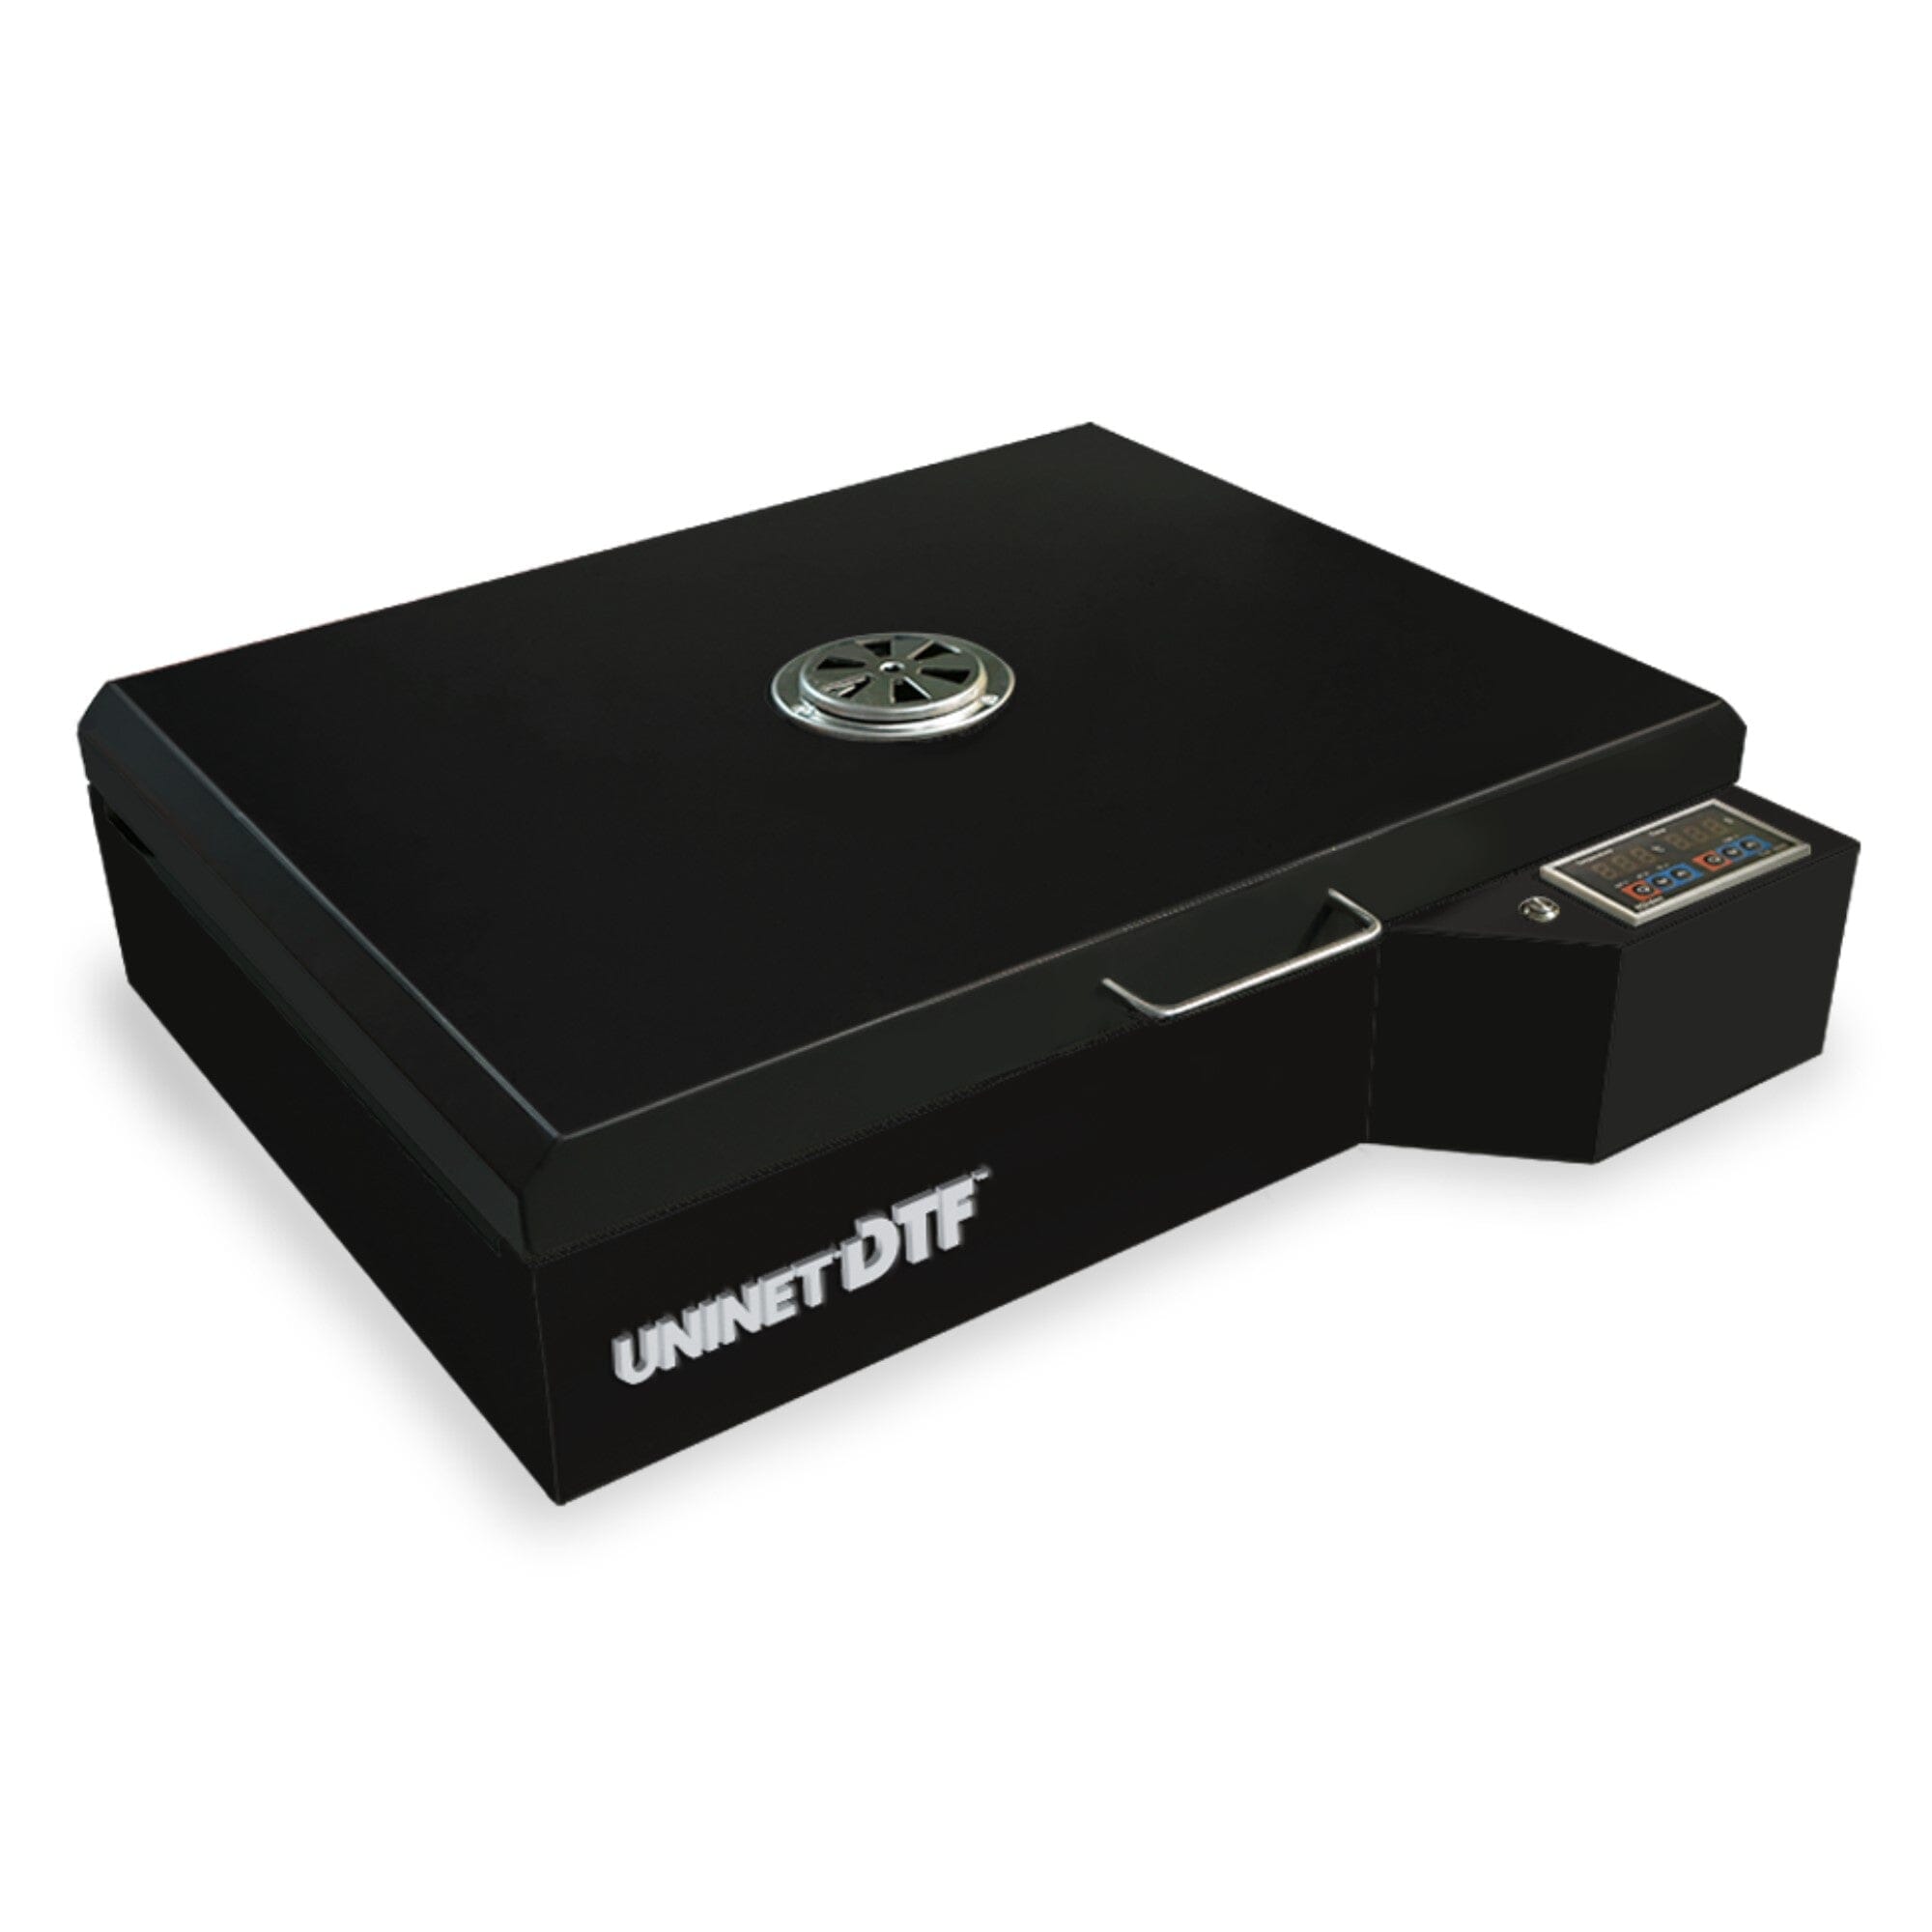 UniNet DTF 1000 Printer  Laser Transfer Supplies